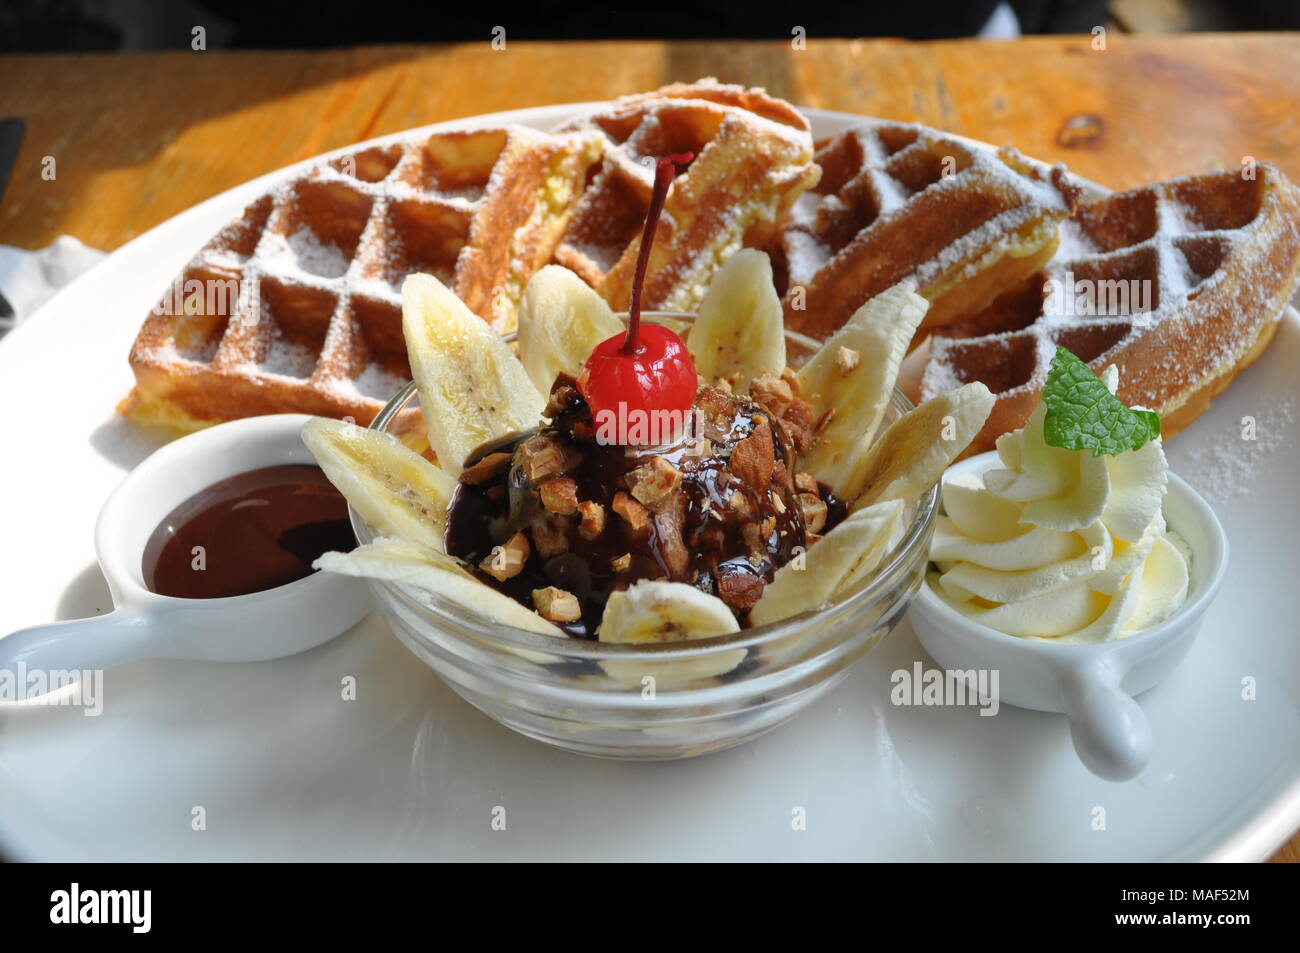 https://c8.alamy.com/comp/MAF52M/waffles-with-ice-cream-sundae-whipped-cream-and-chocolate-sauce-MAF52M.jpg